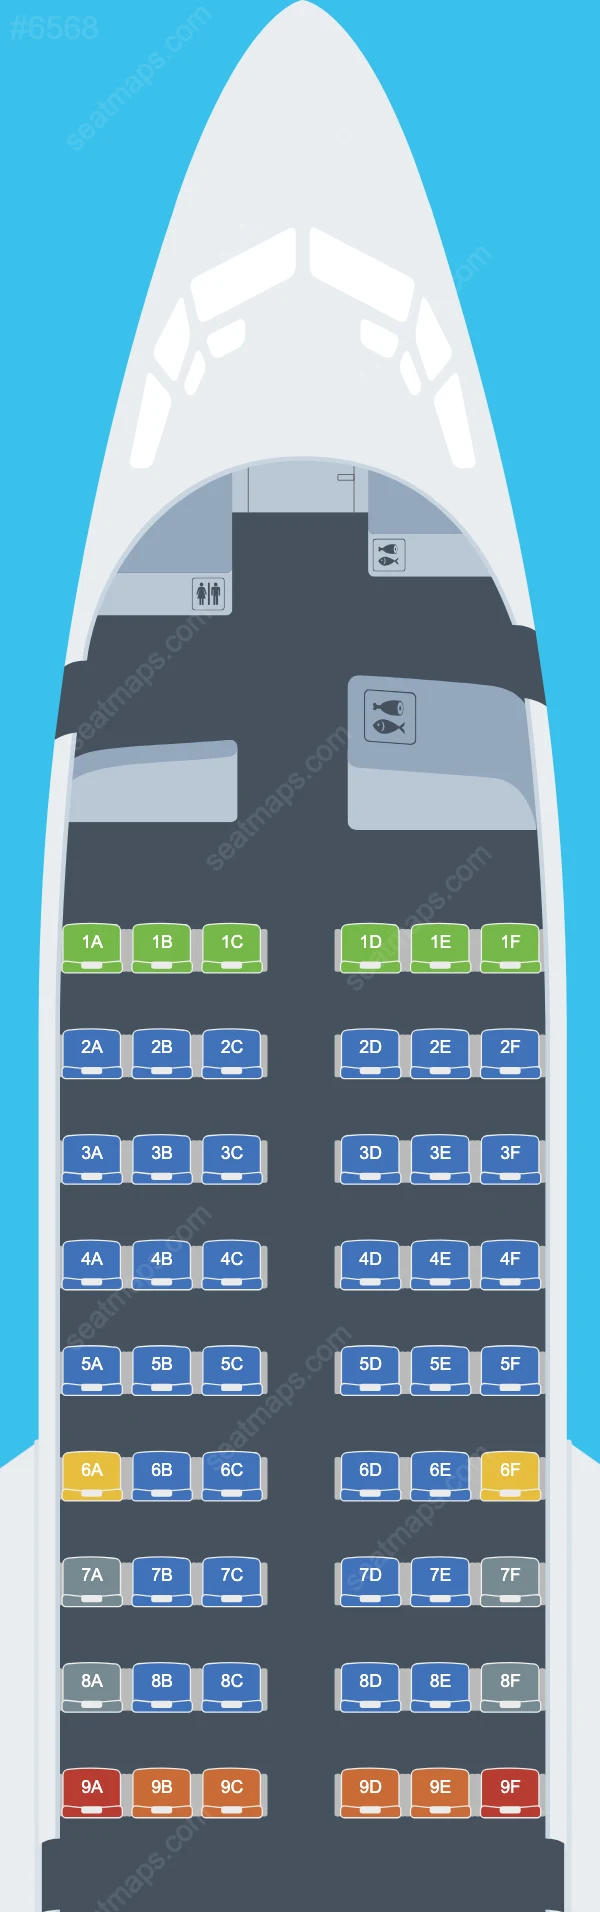 Blue Air Boeing 737 Seat Maps 737-500 V.1